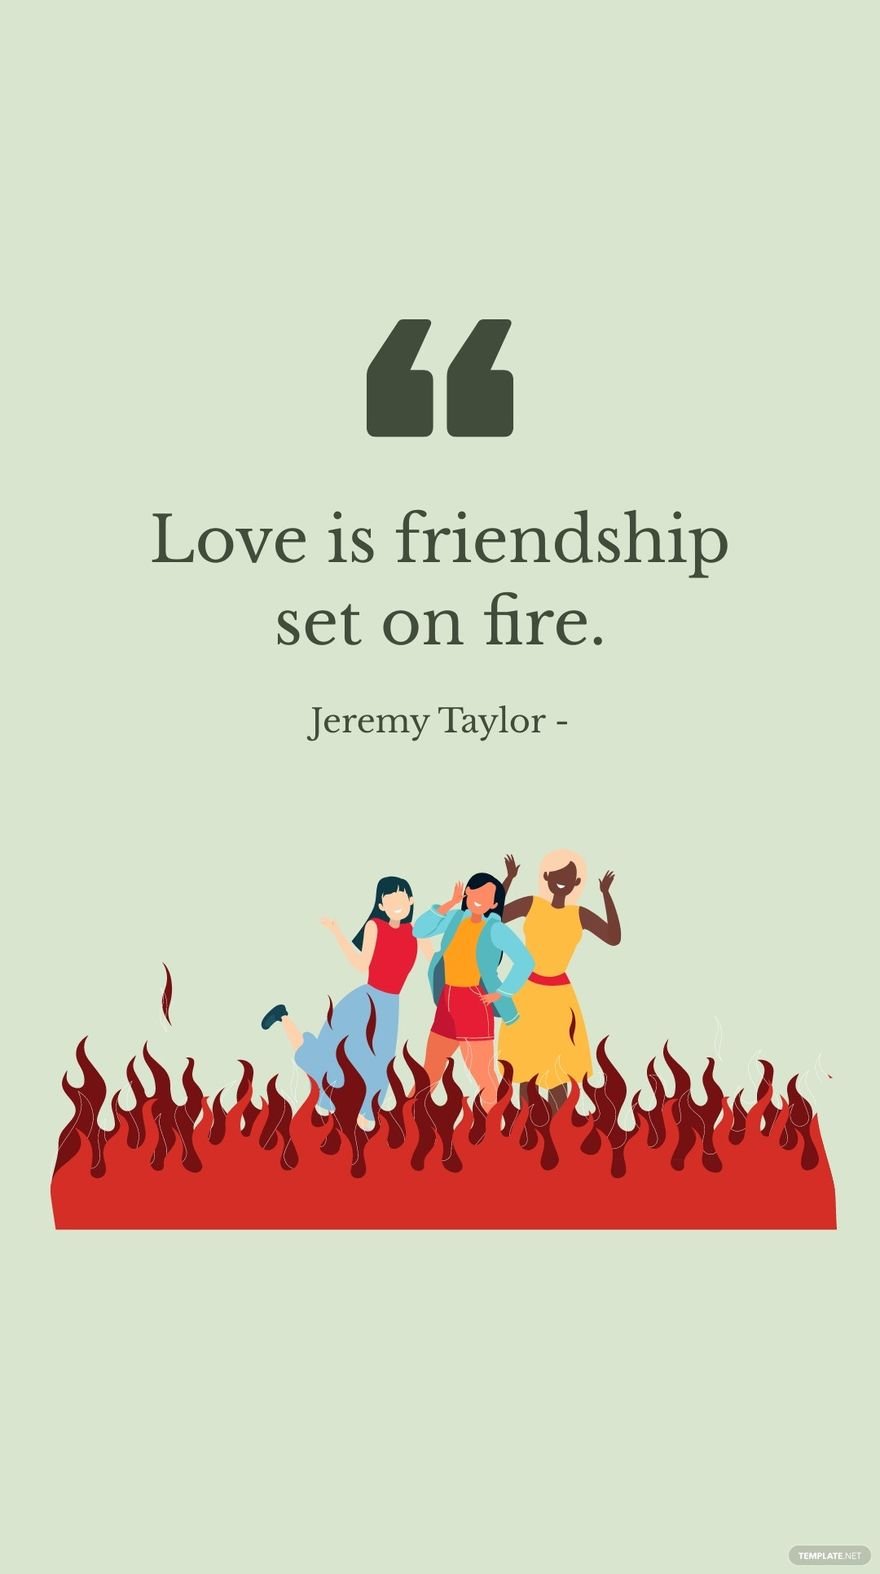 Free Jeremy Taylor - Love is friendship set on fire.